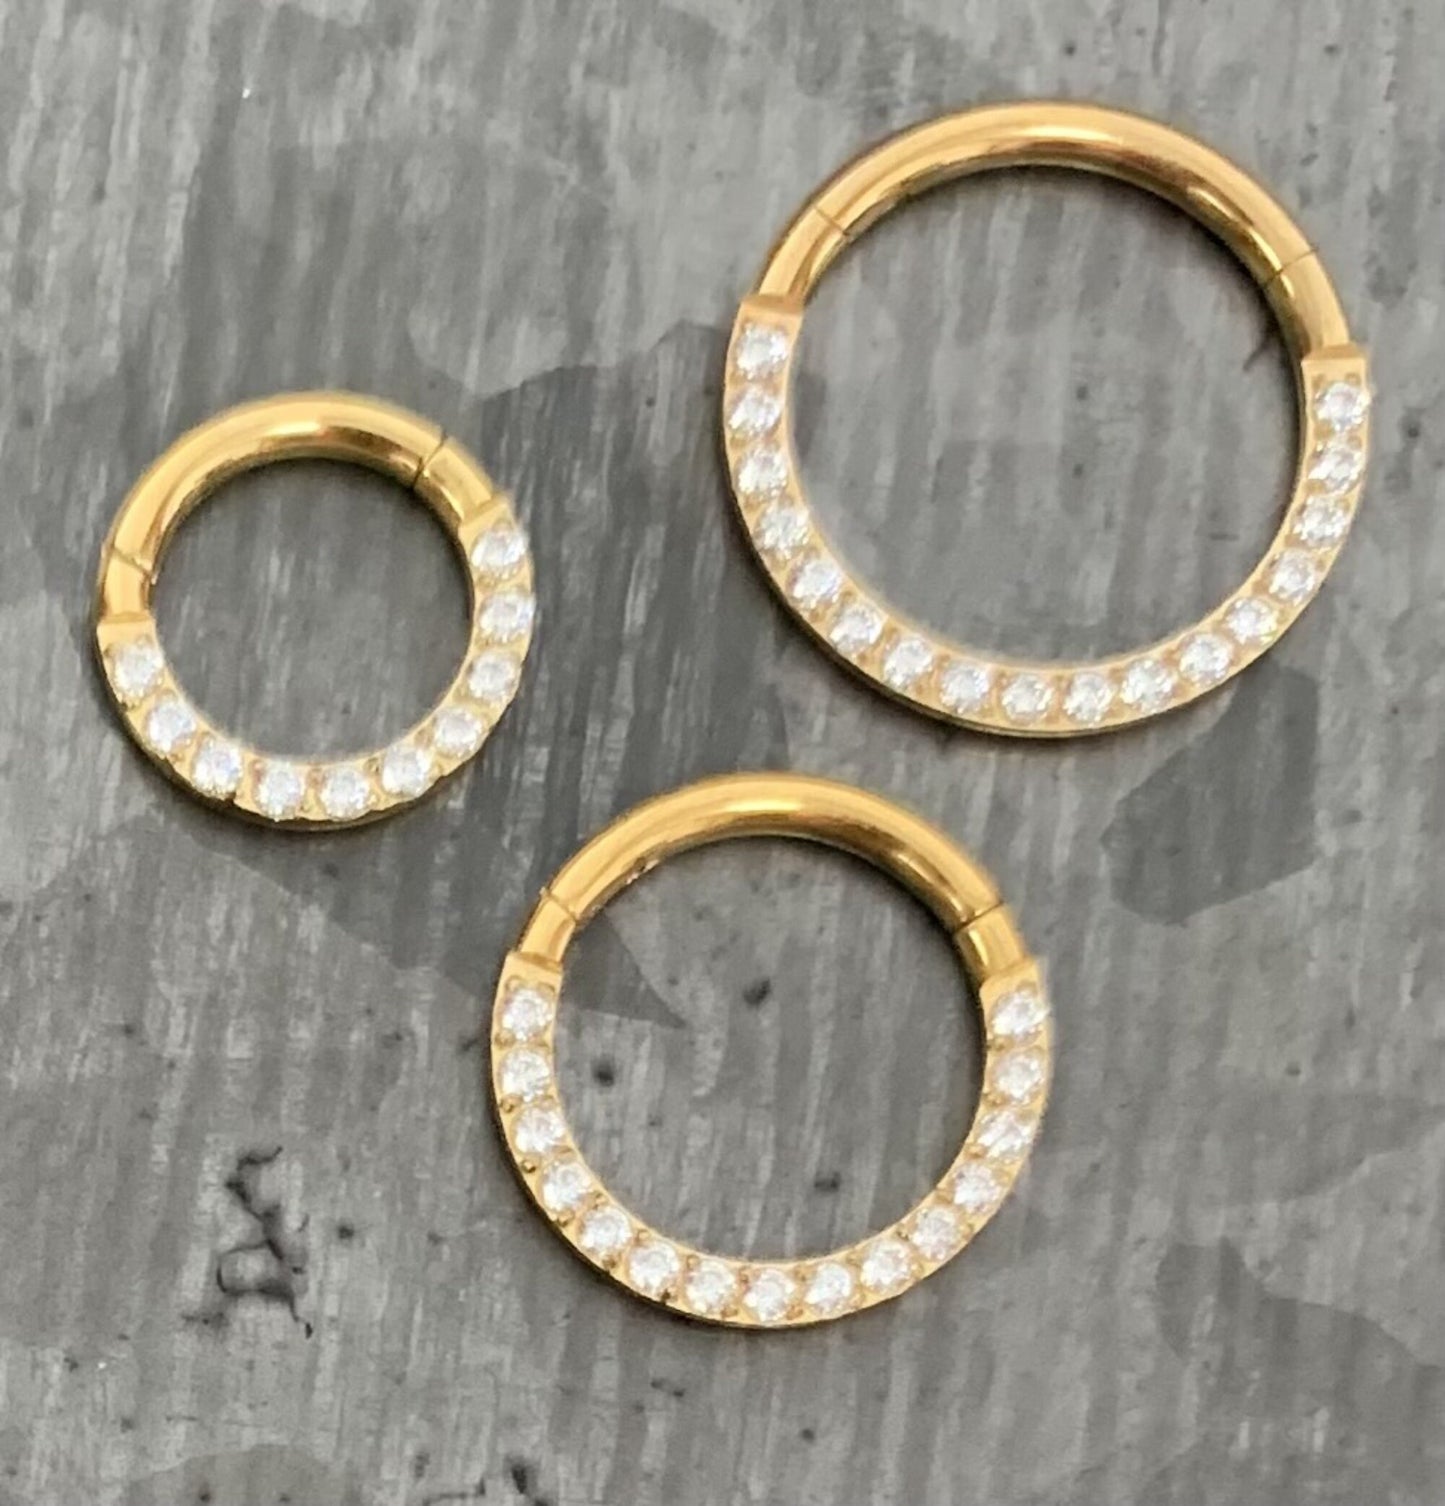 1 Piece Gold CNC Set CZ Gem Front Hinged Segment Septum Ring - Gauges 14g, 16g or 18g - Internal Diameter 6mm, 8mm or 10mm available!